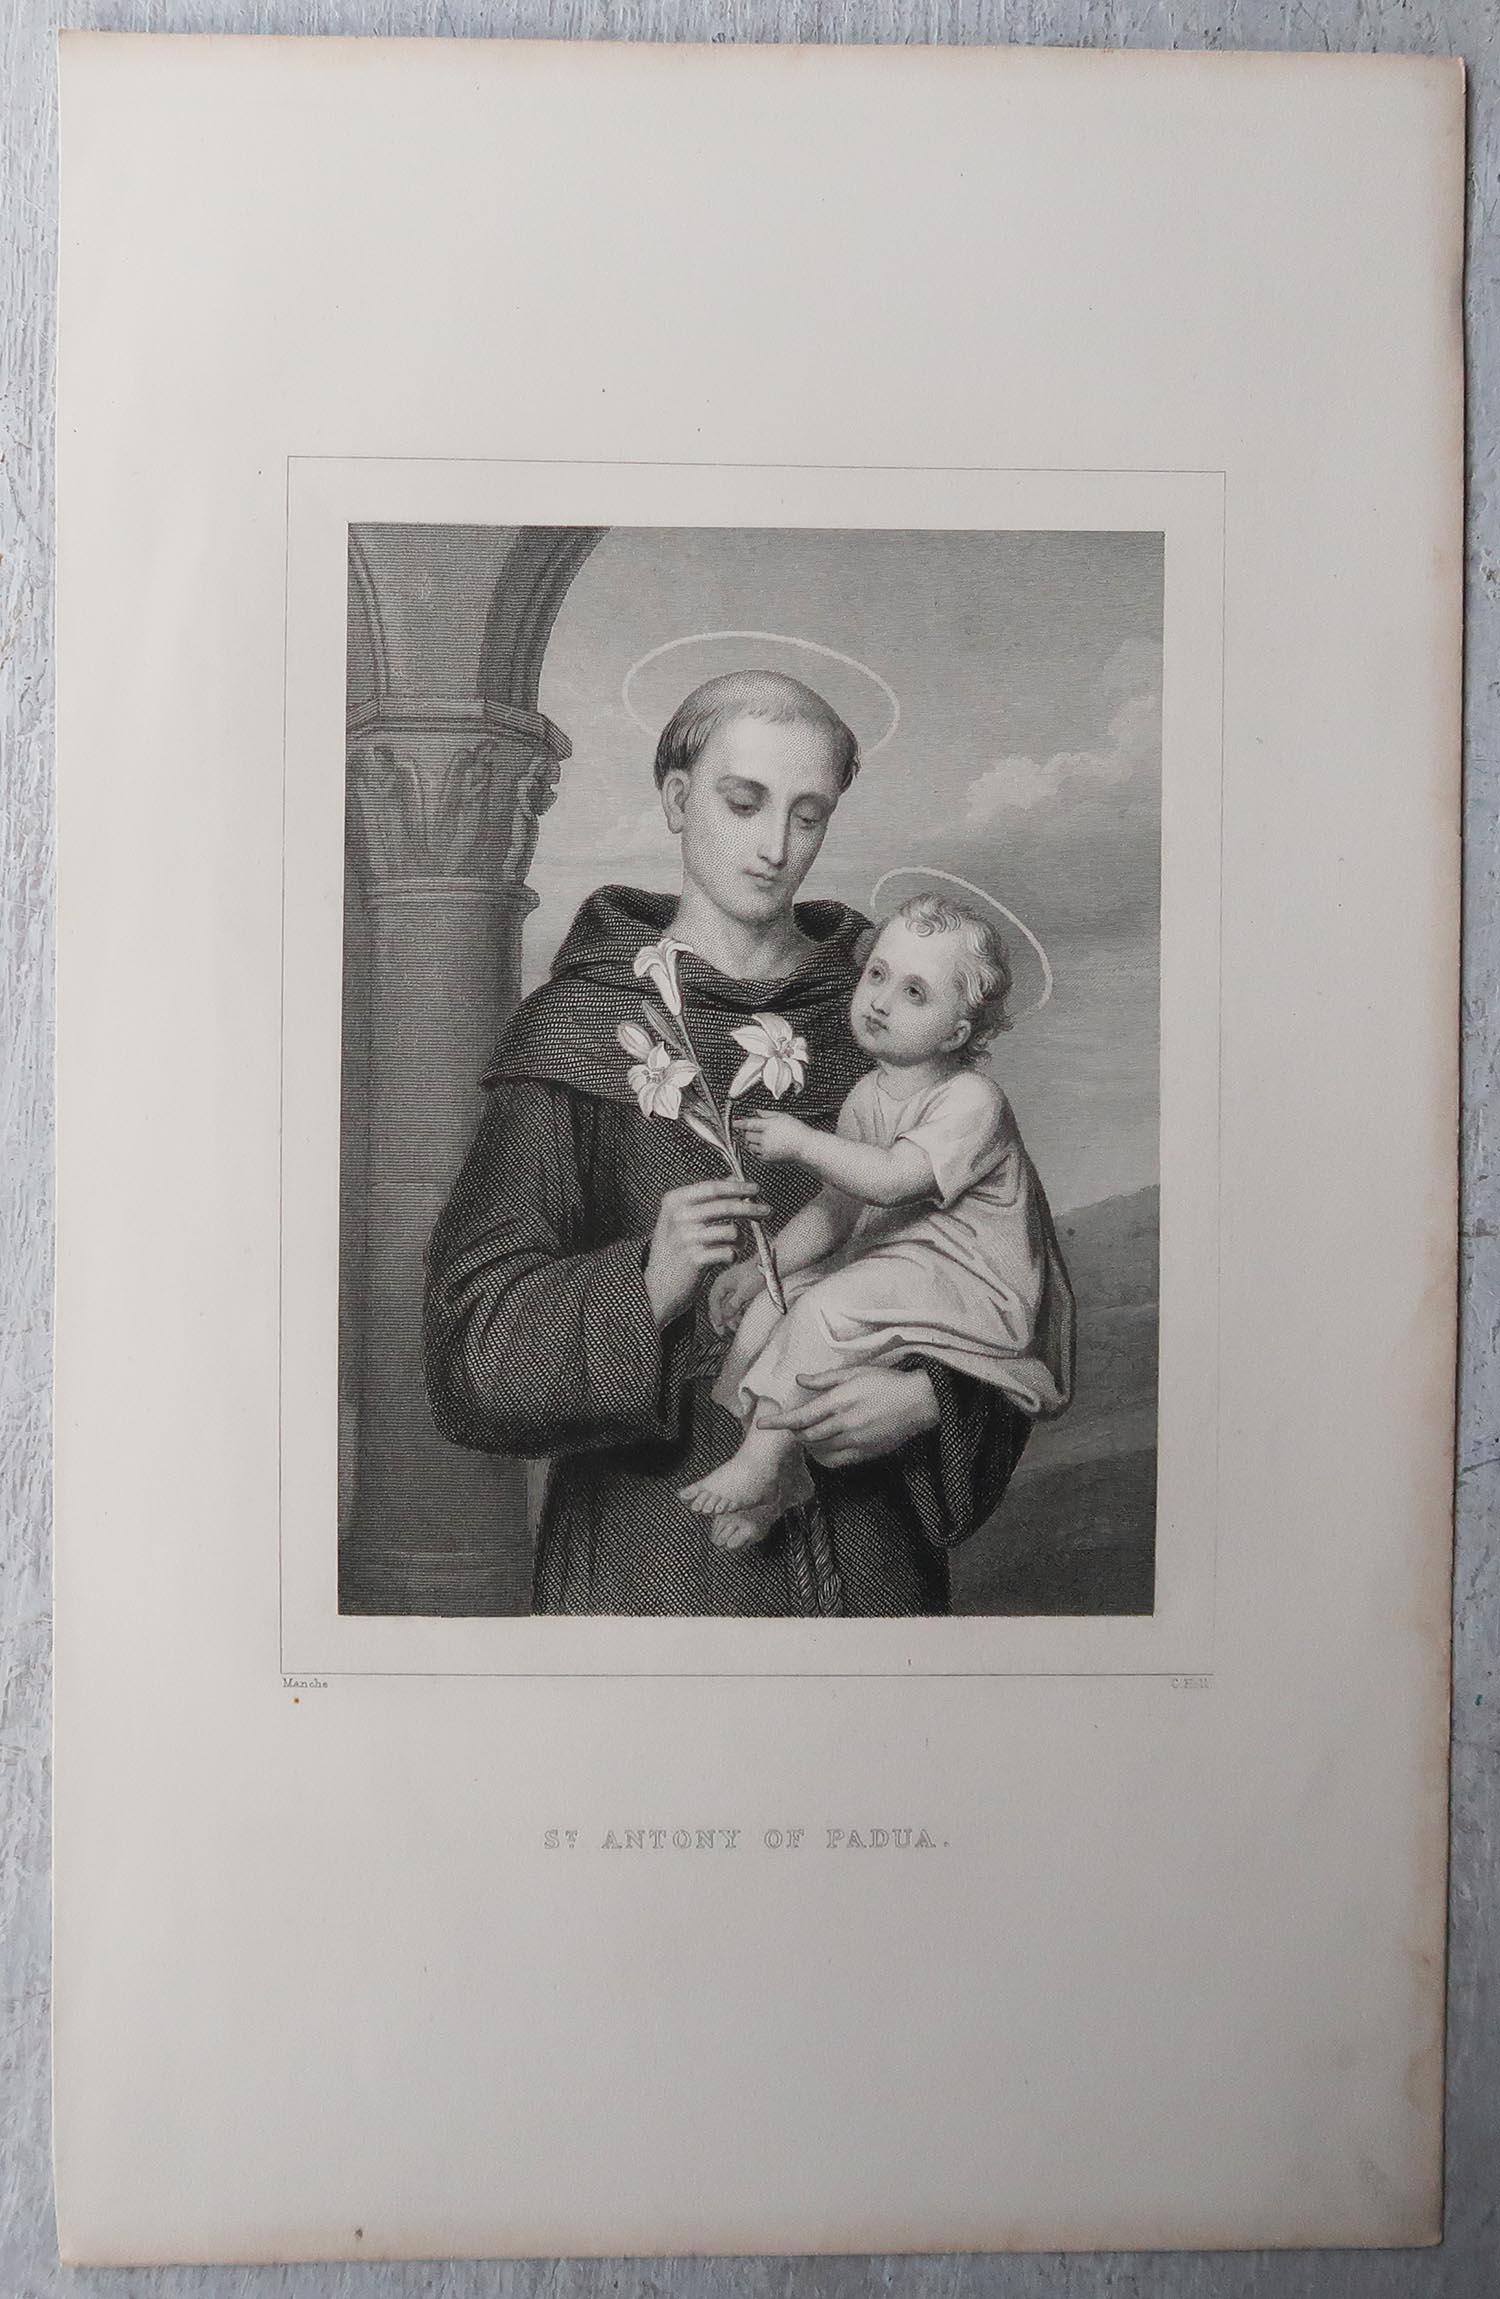 English Antique Print of St Antony of Padua, After Manche, C.1850